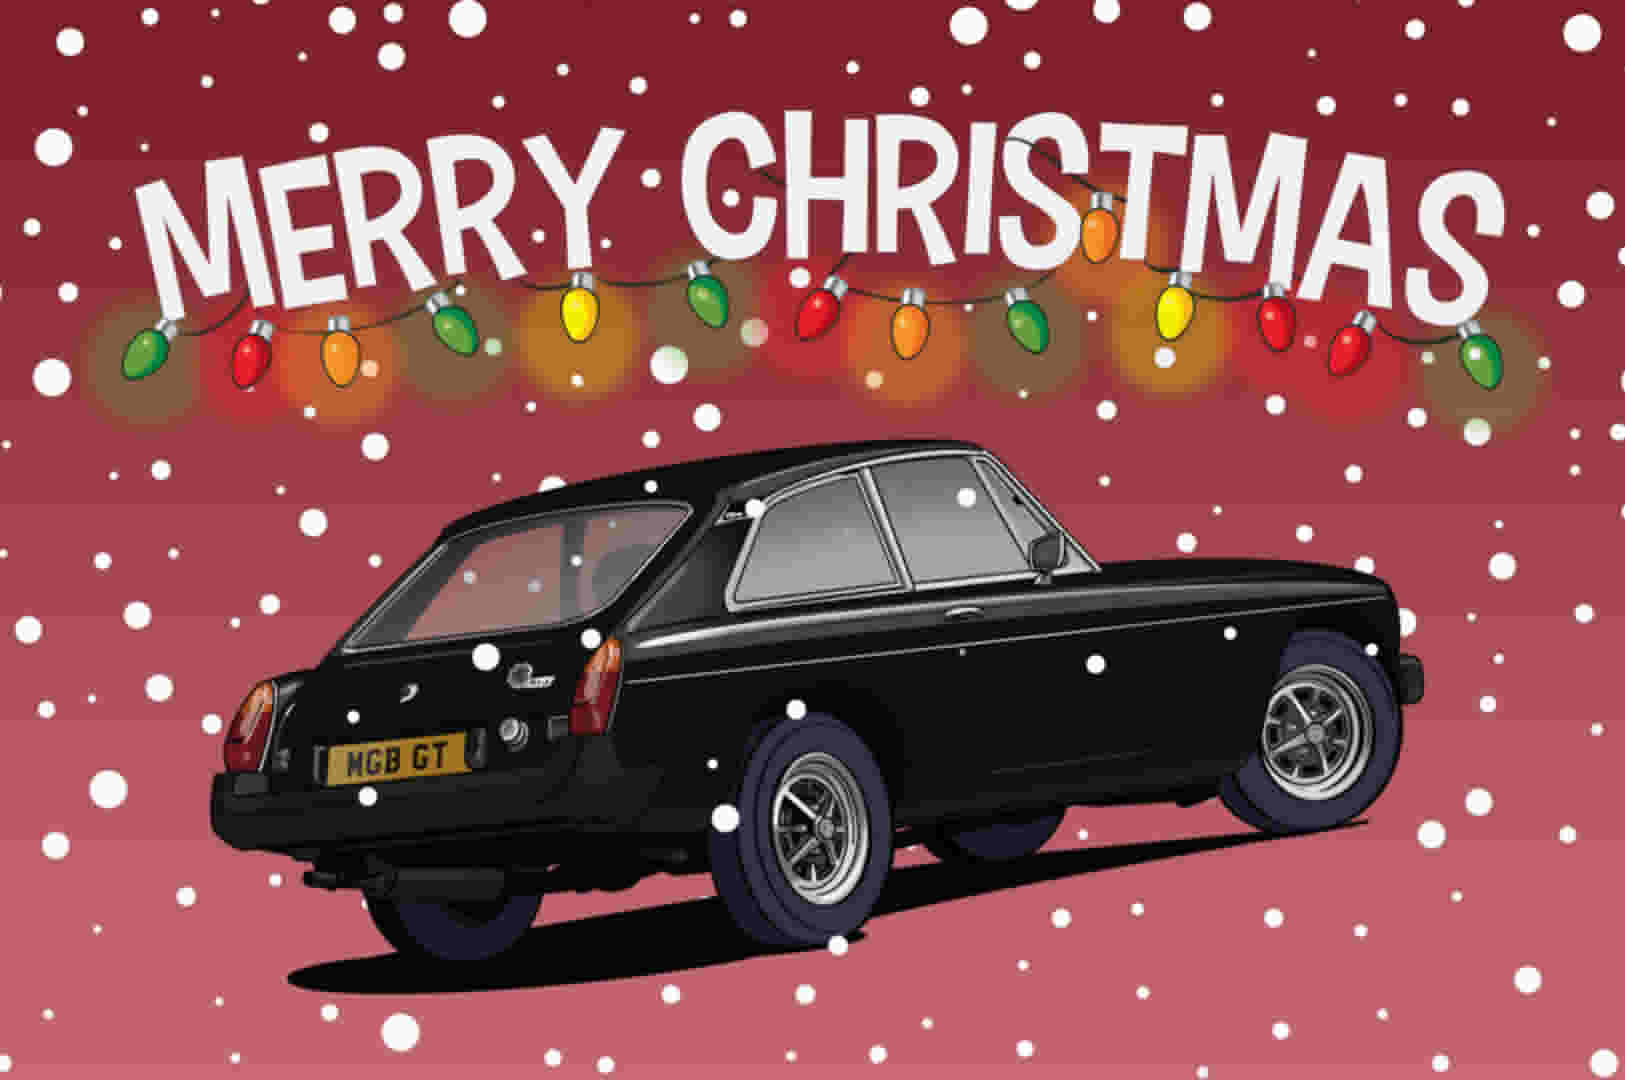 MGB GT Car Christmas Card